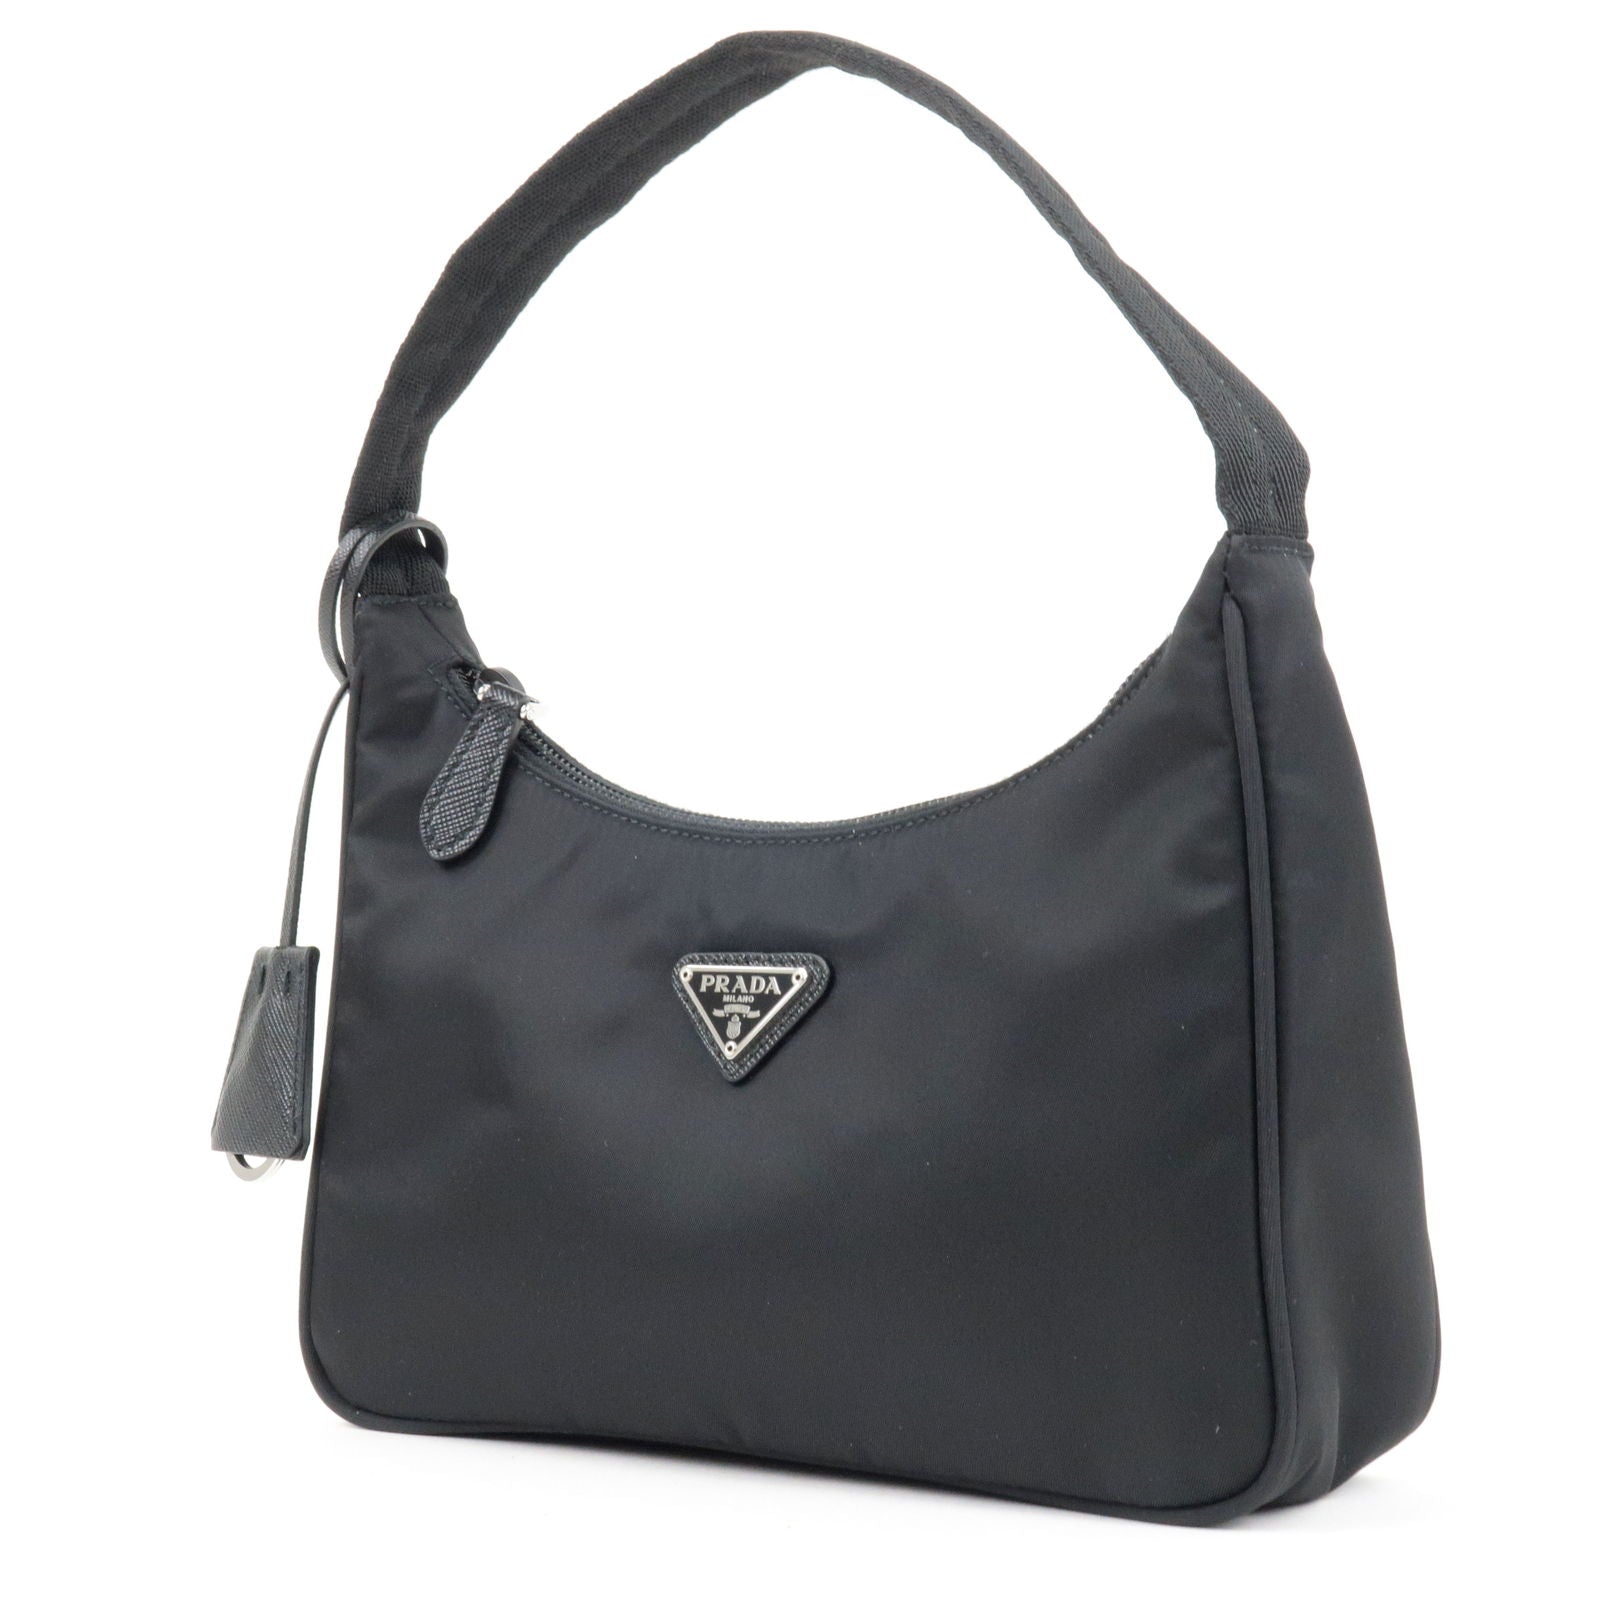 Prada - Black Nylon Stud-Embellished Tote Bag